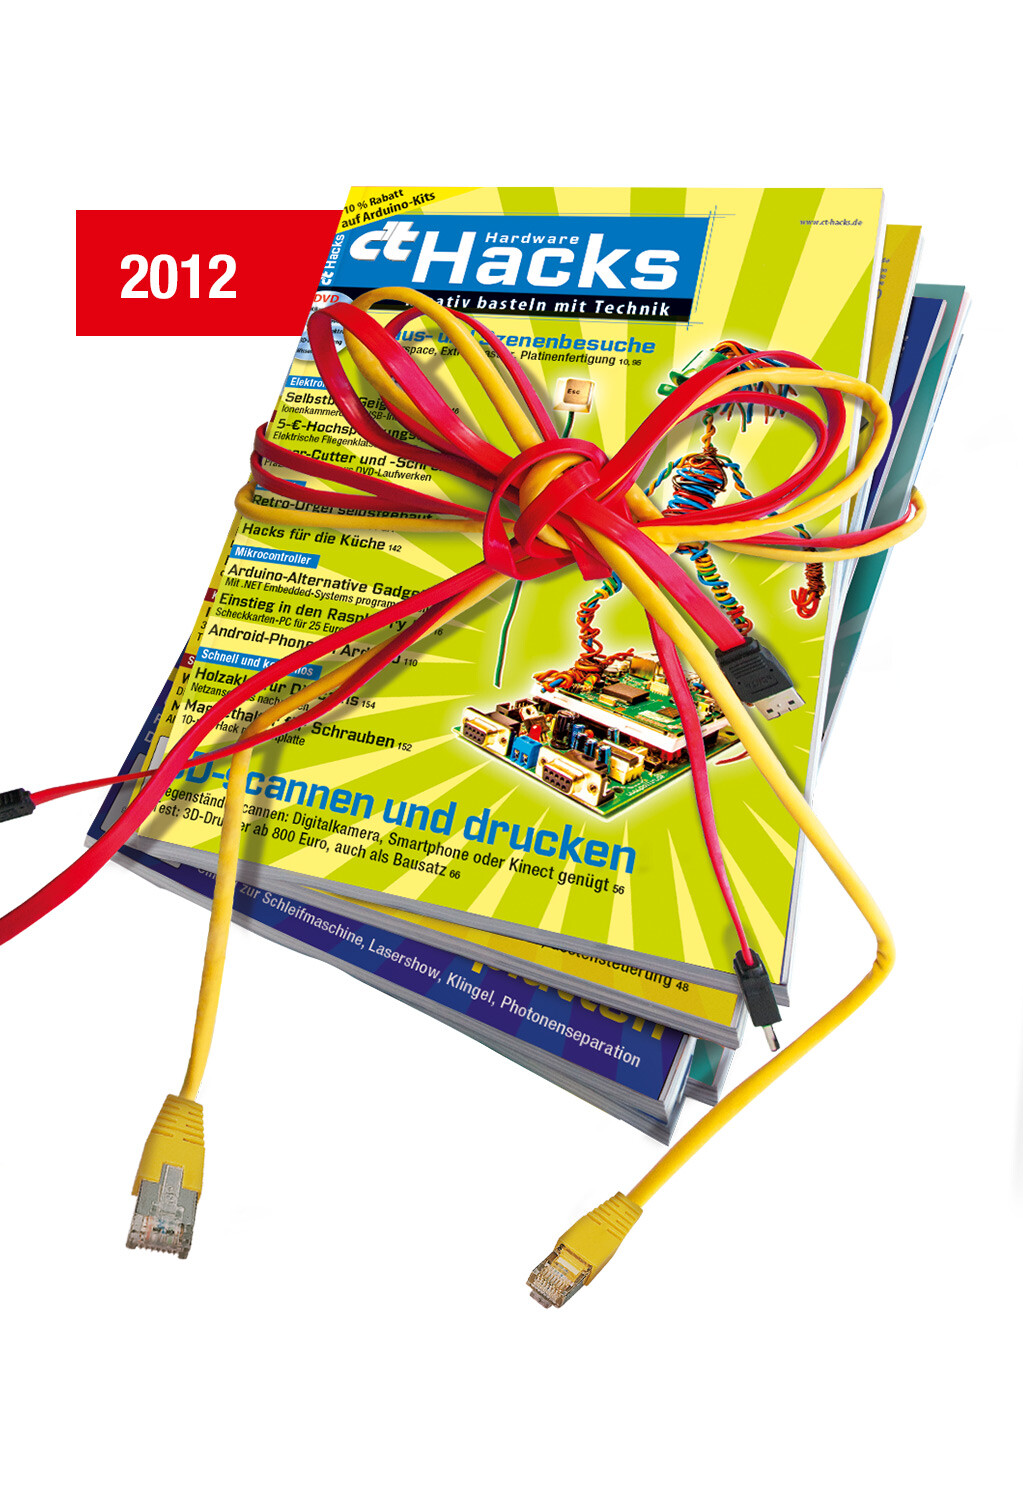 c't Hardware Hacks Jahrgang 2012 mit 48% Rabatt